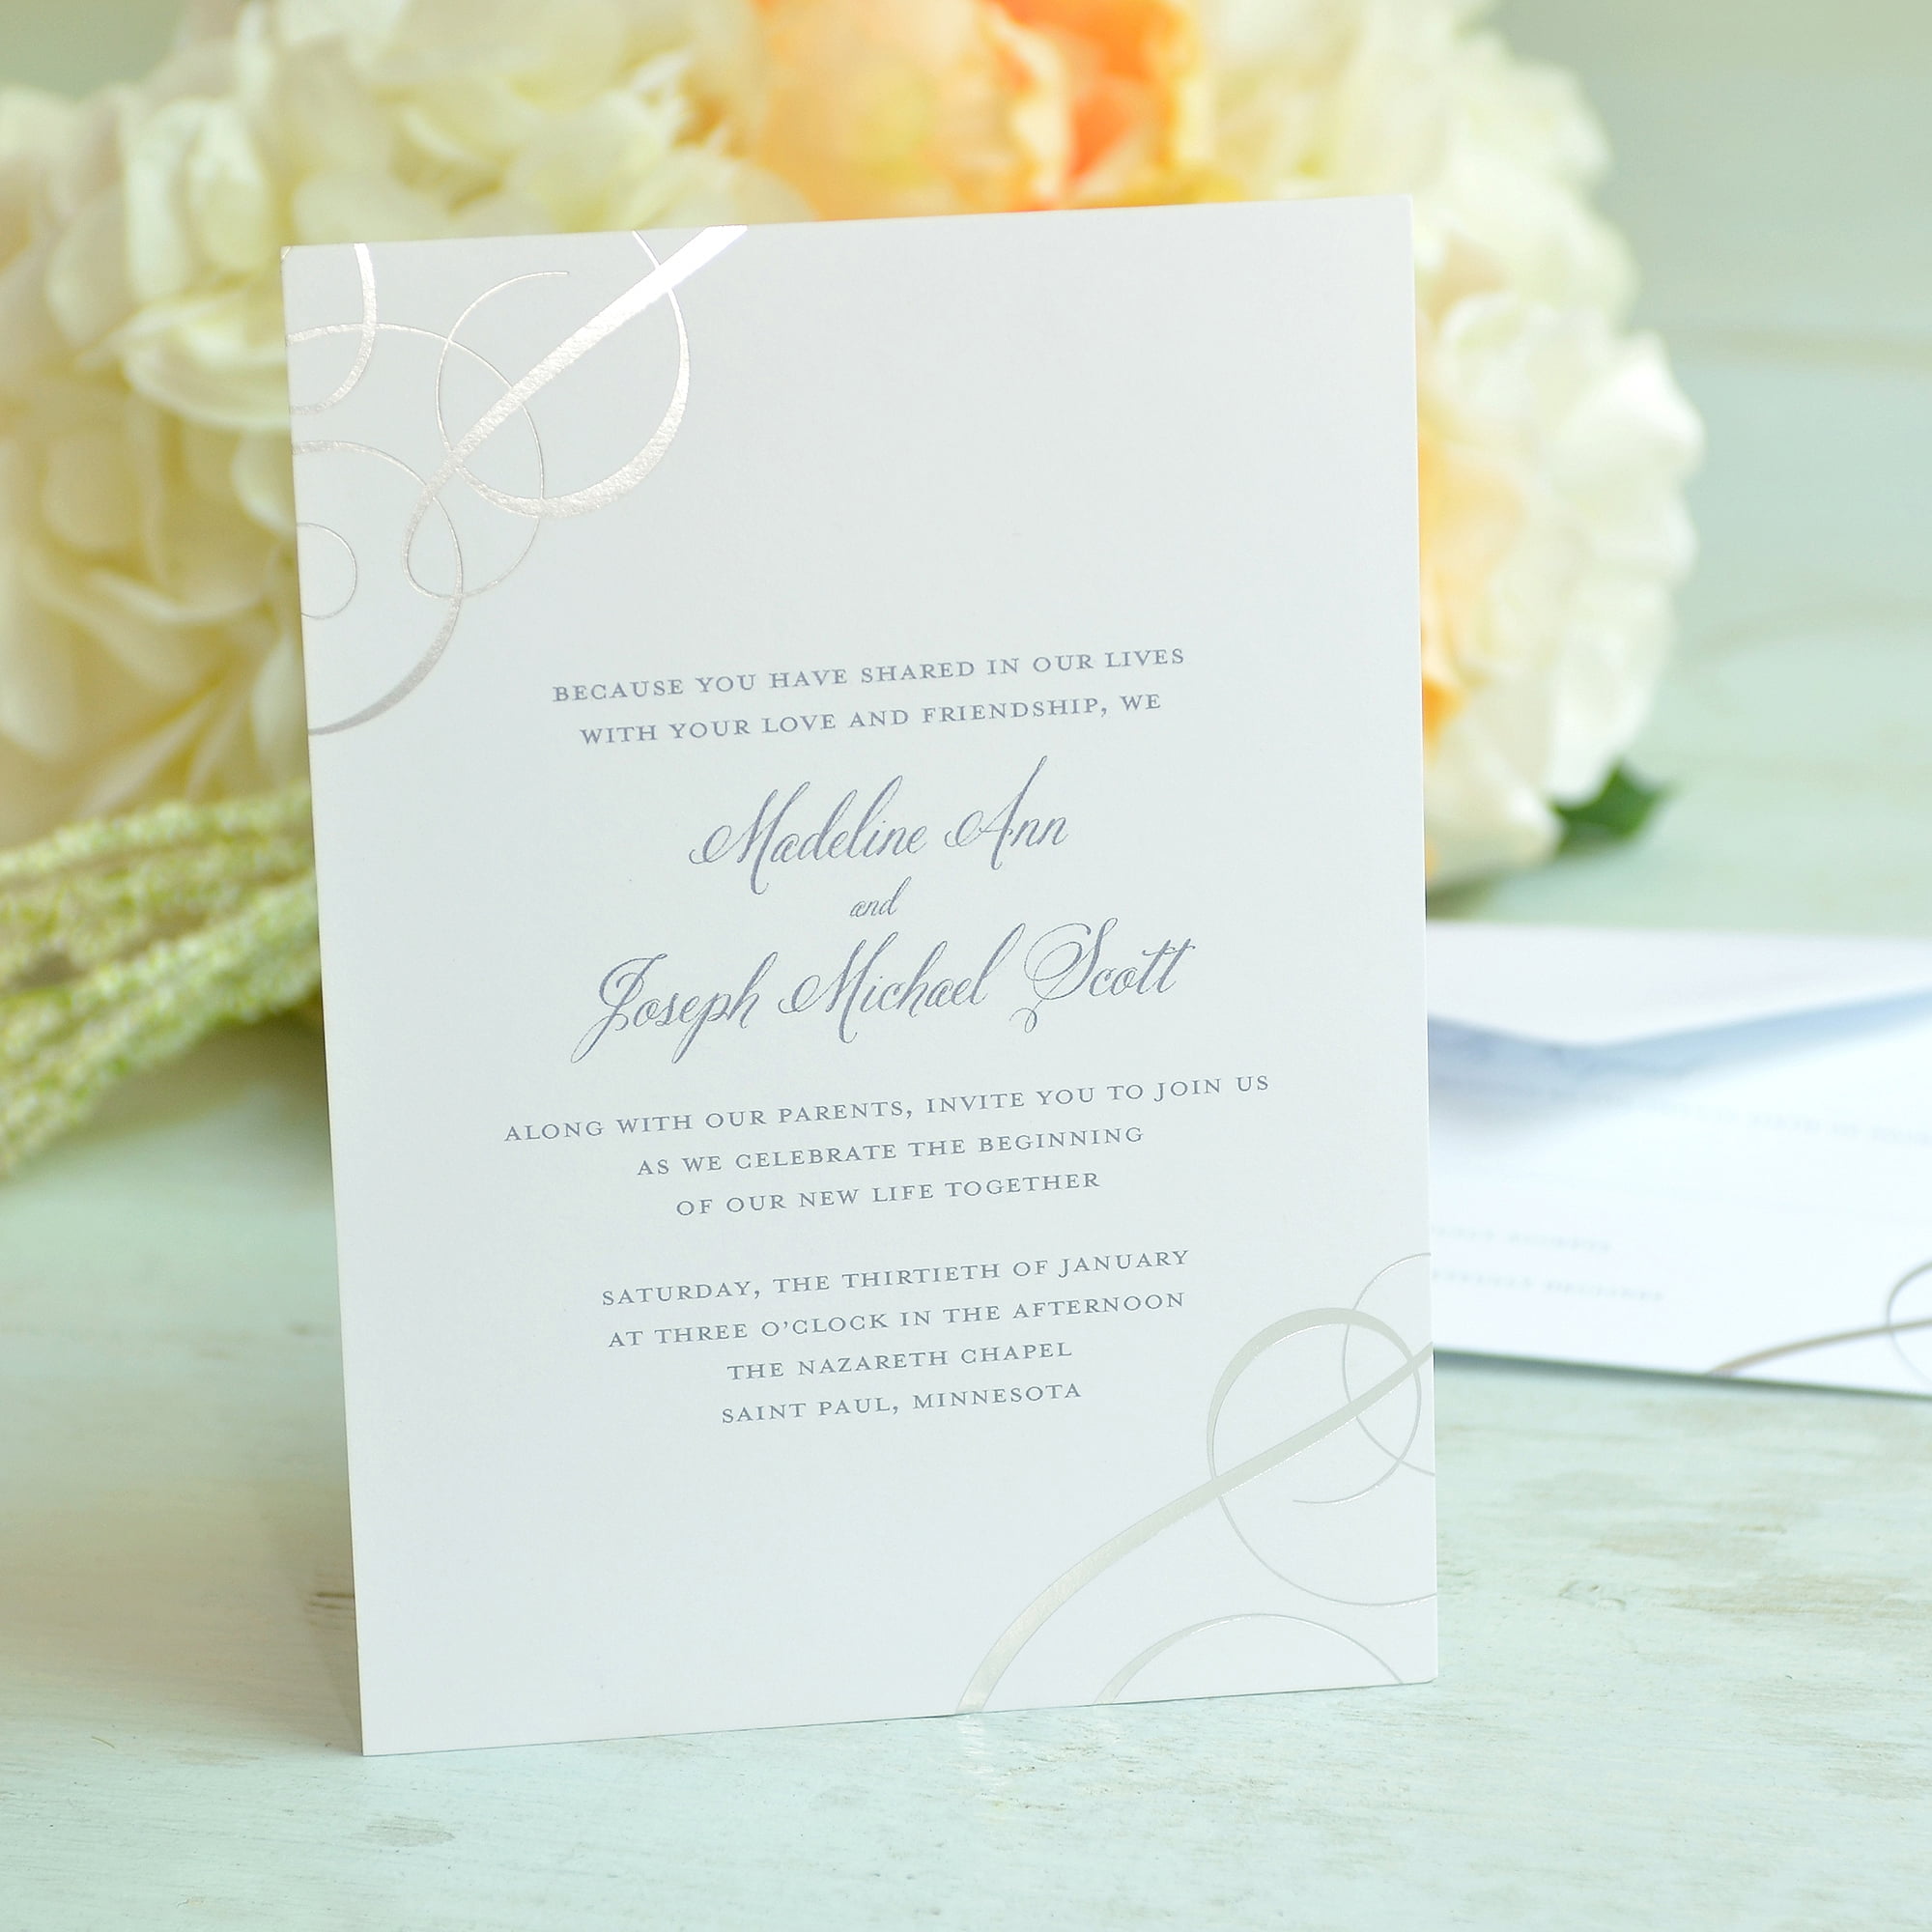 Wilton Gold Scrollwork Wedding Invitation Kit for 50 for sale online 